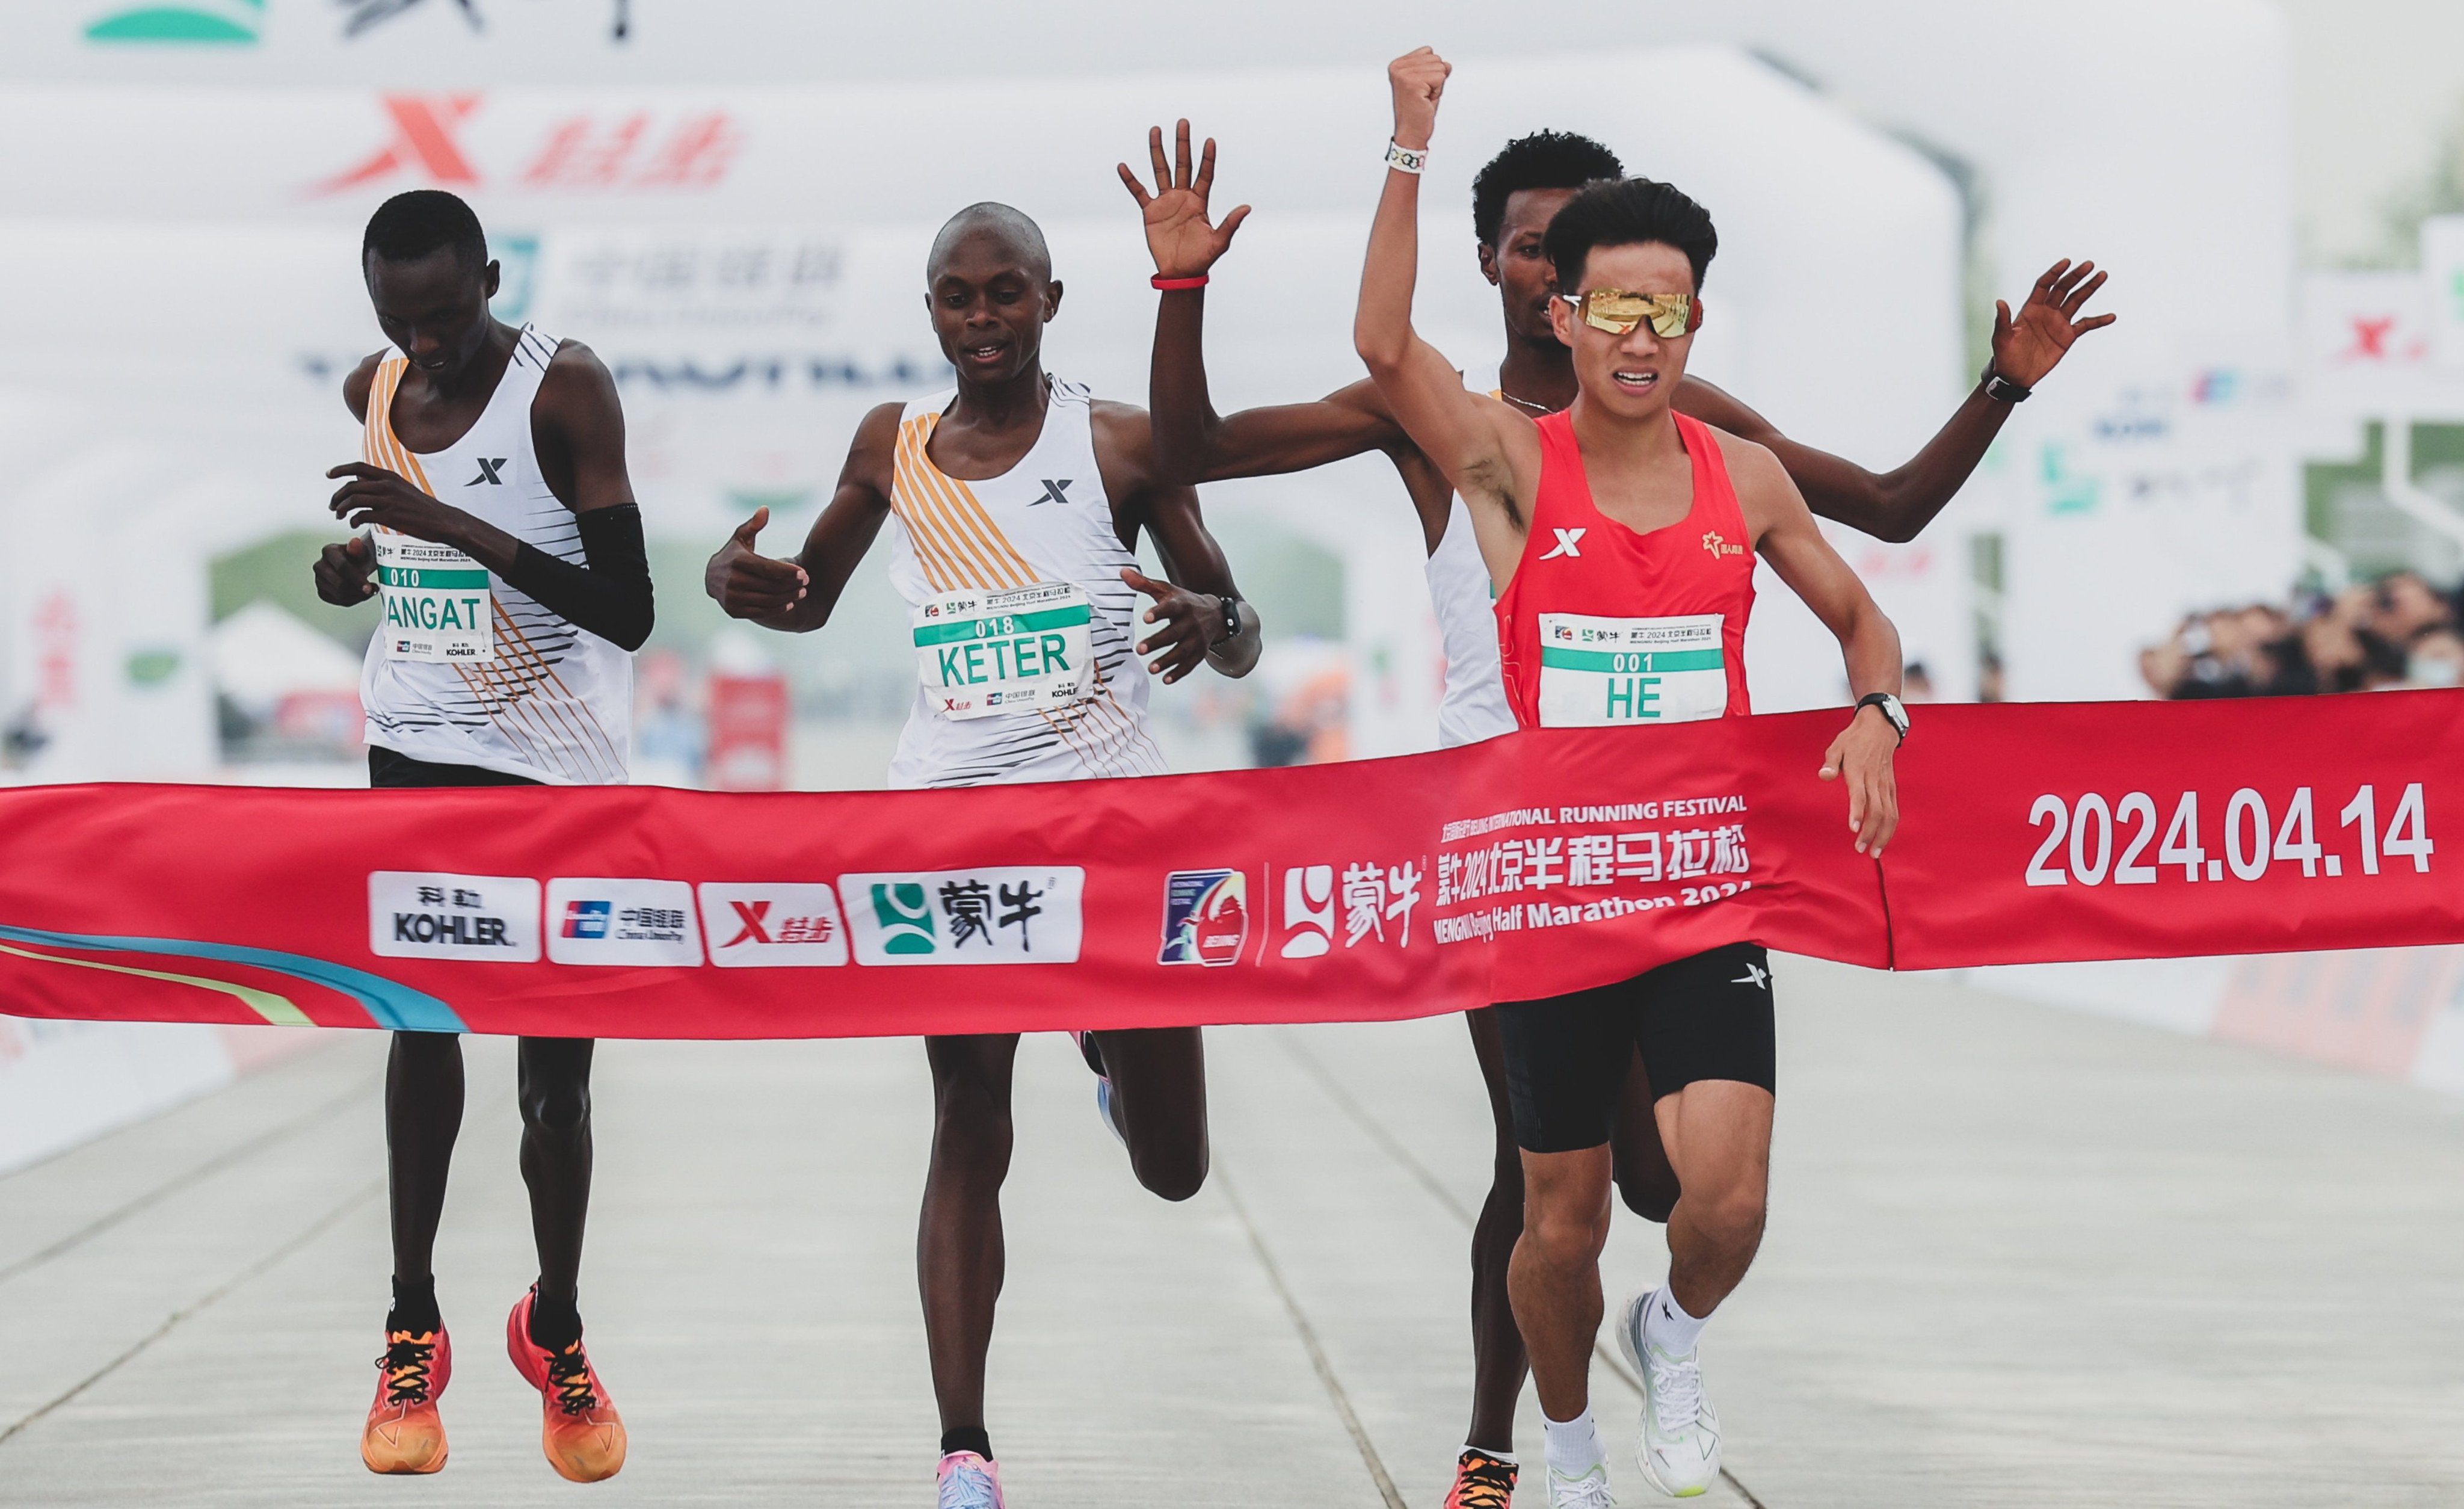 China’s He Jie winning the Beijing Half Marathon on Sunday ahead of Kenyans Willy Mnangat and Robert Keter, and Ethiopia’s Dejene Hailu Bikila. Photo: Handout